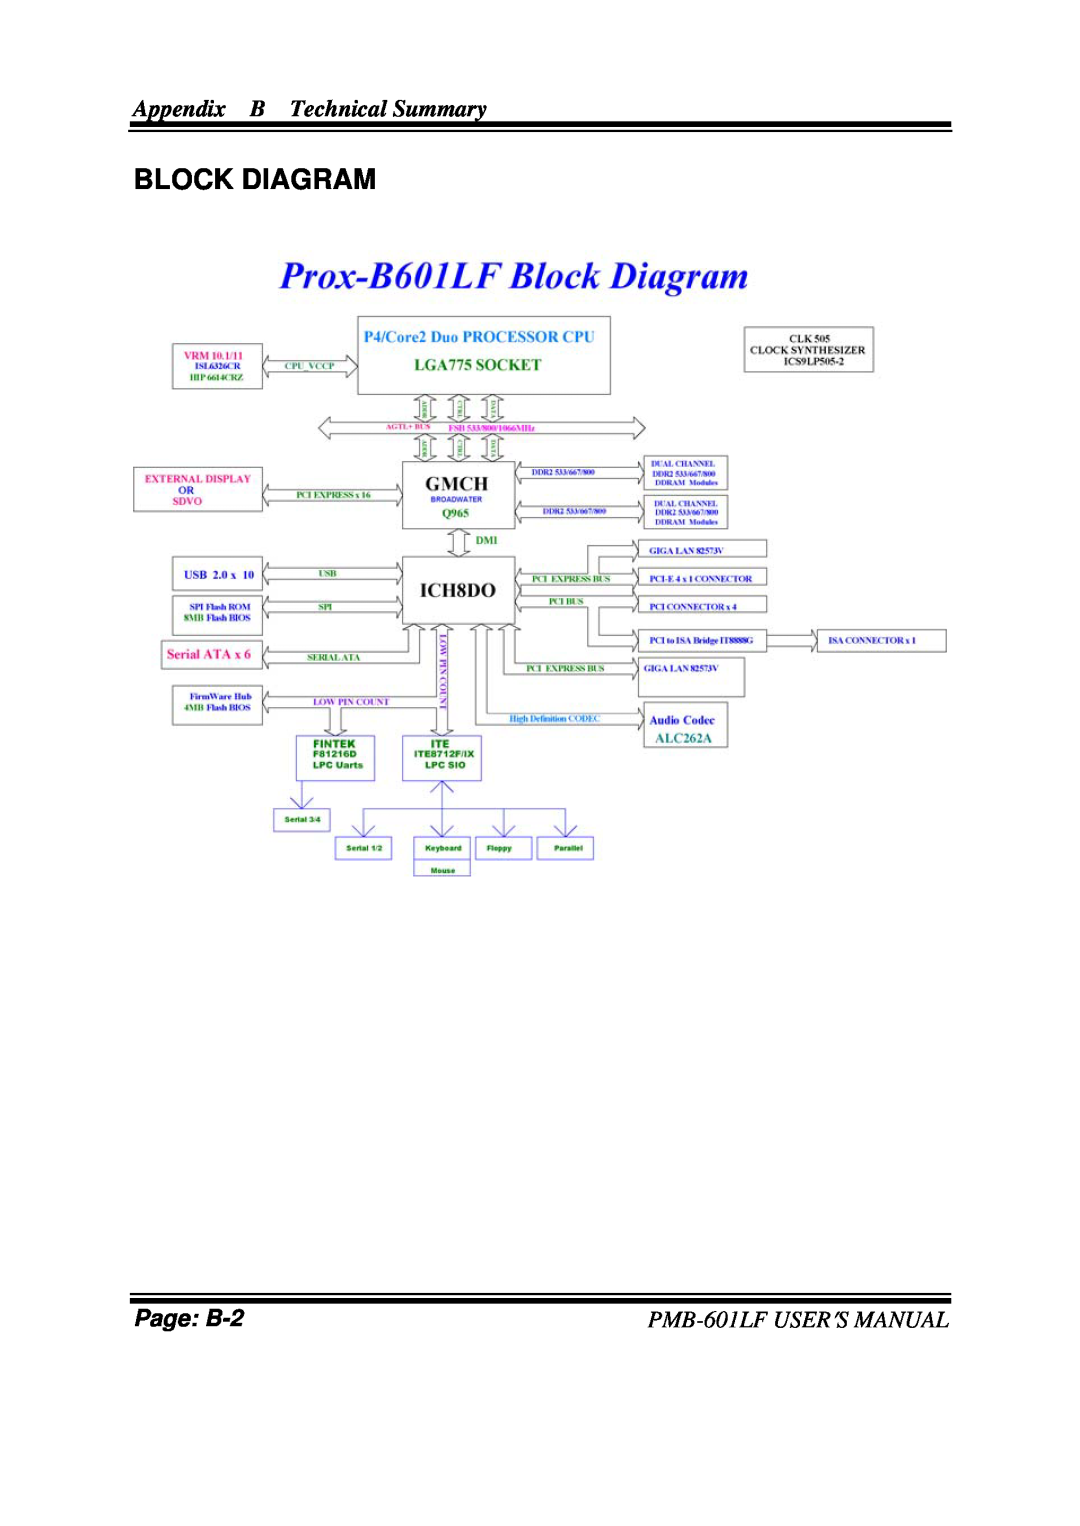 Intel user manual Block Diagram, Page: B-2, Appendix B Technical Summary, PMB-601LFUSER′S MANUAL 